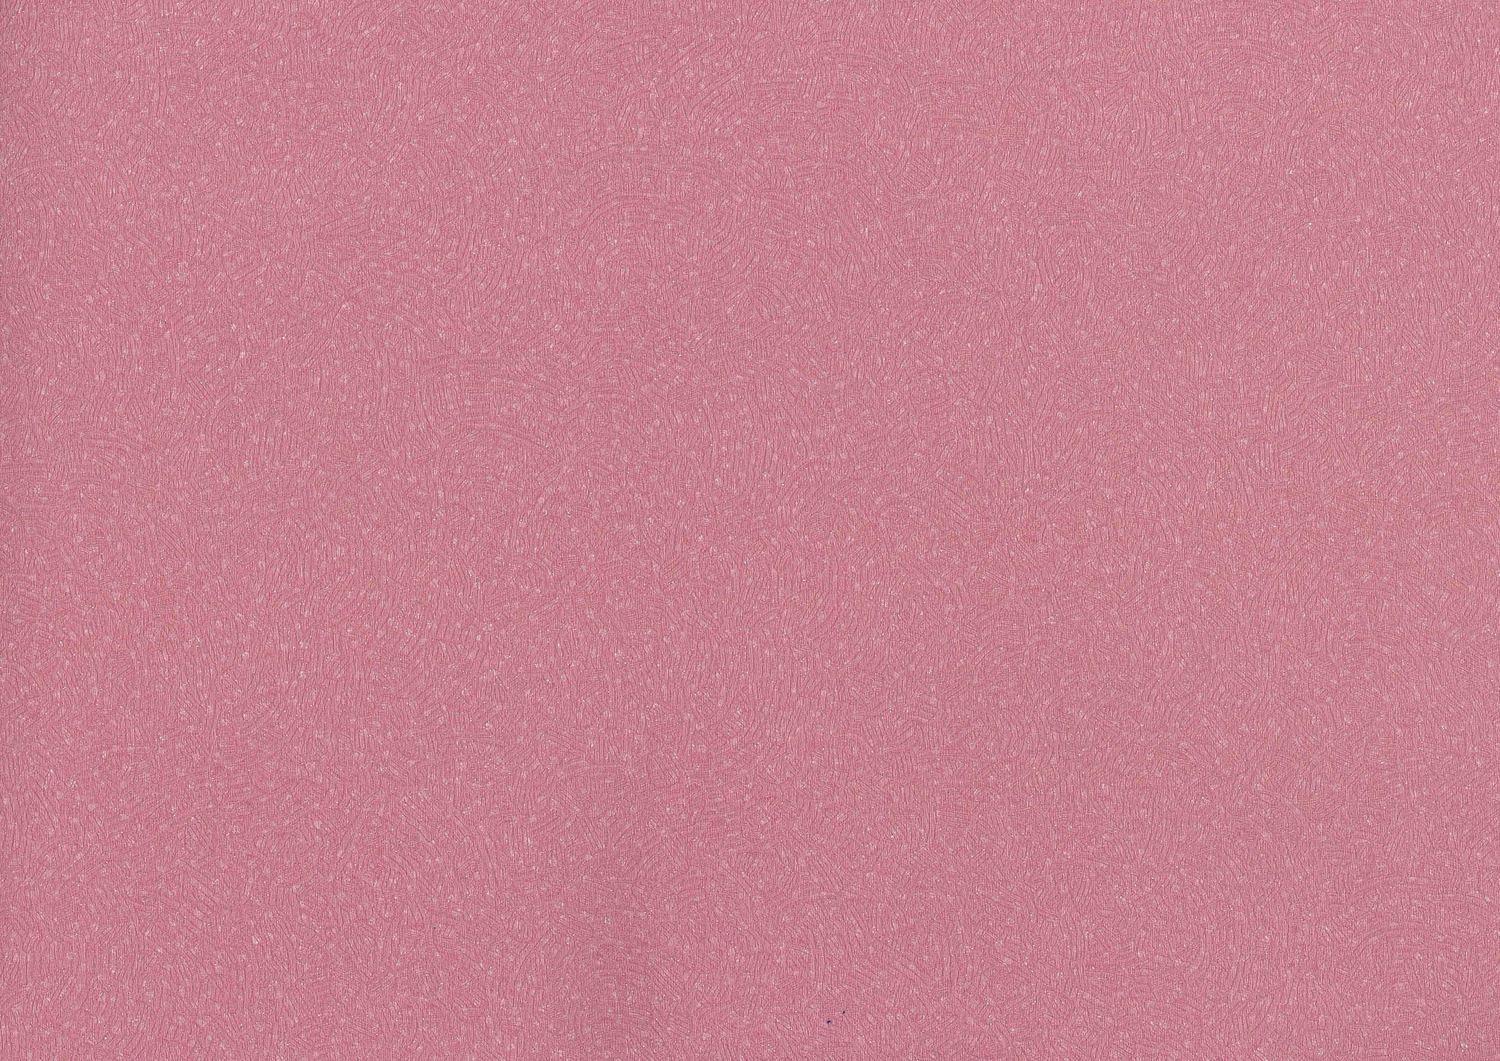 Koleksi Wallpaper Polos Pink CE 8010 4 41